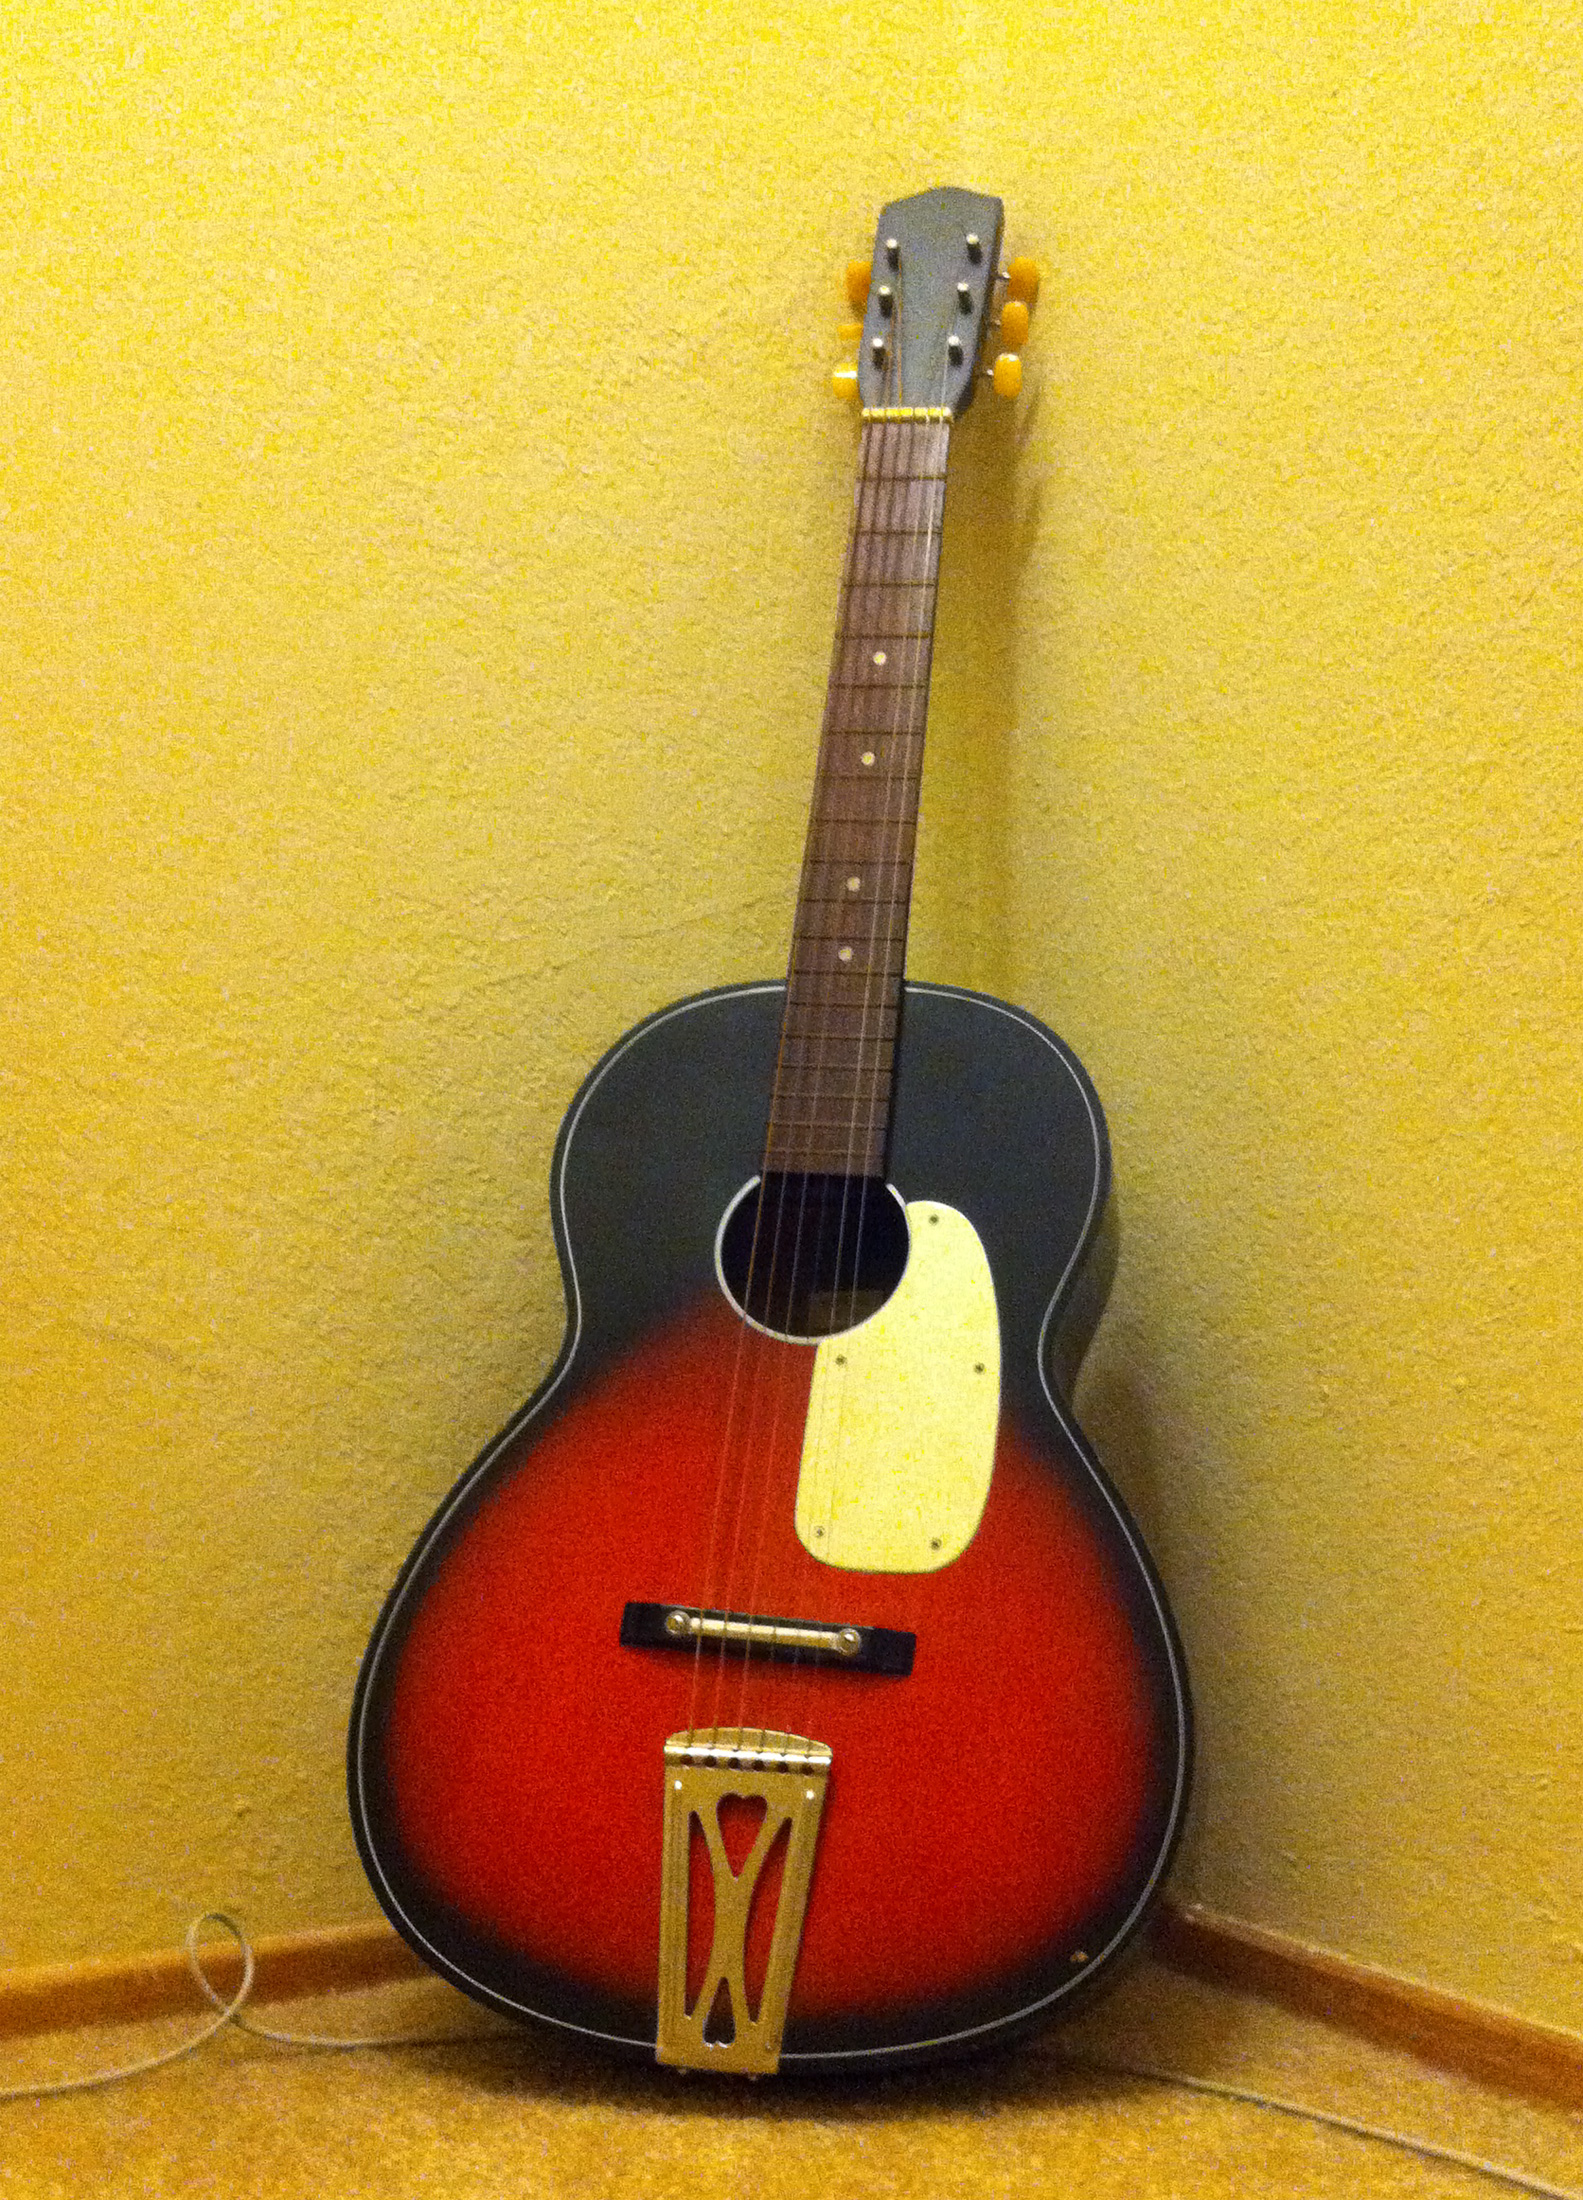 File:Old guitar (photo by Anita Hart).jpg - Wikimedia Commons